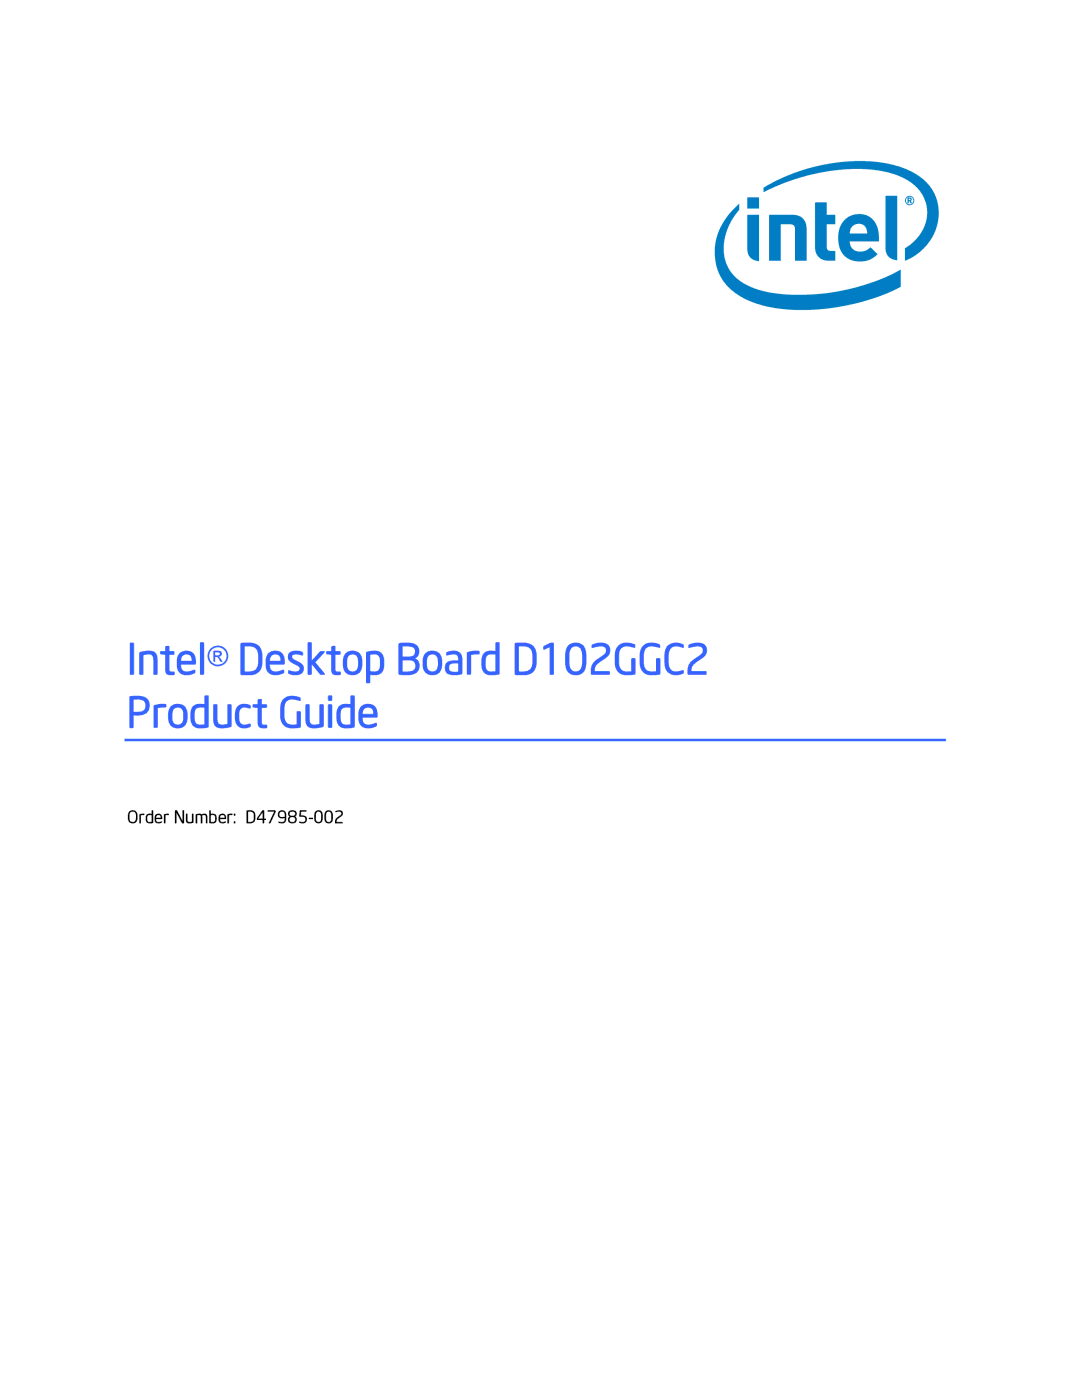 Intel manual Intel Desktop Board D102GGC2 Product Guide 